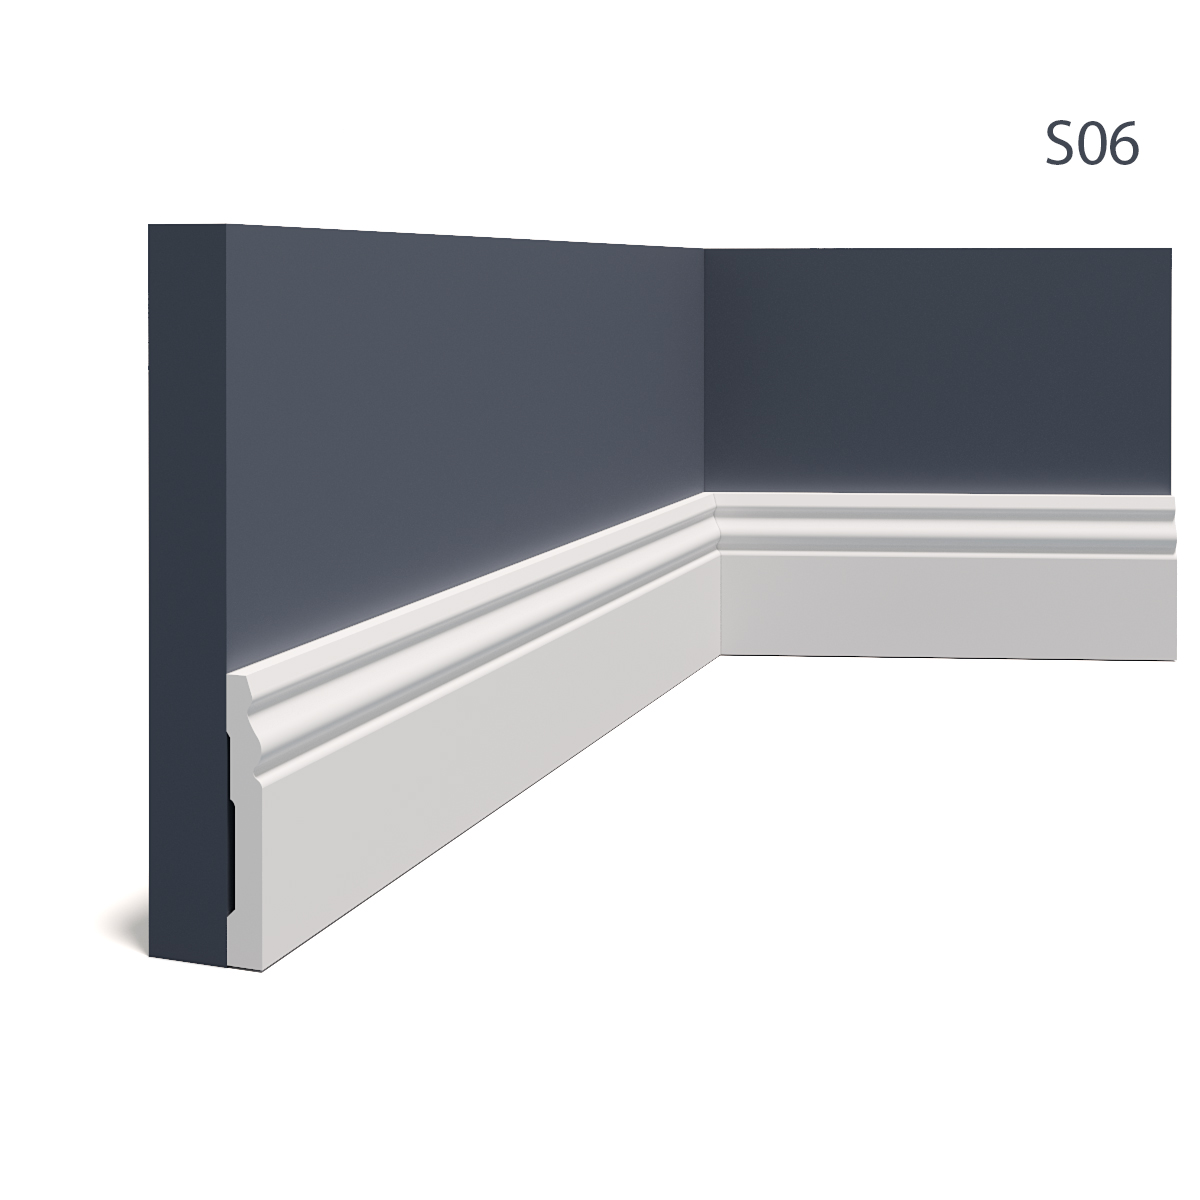 Plinte decorative Manavi MNV-S6 - 9.6x1.3x200, material: Polimer rigid